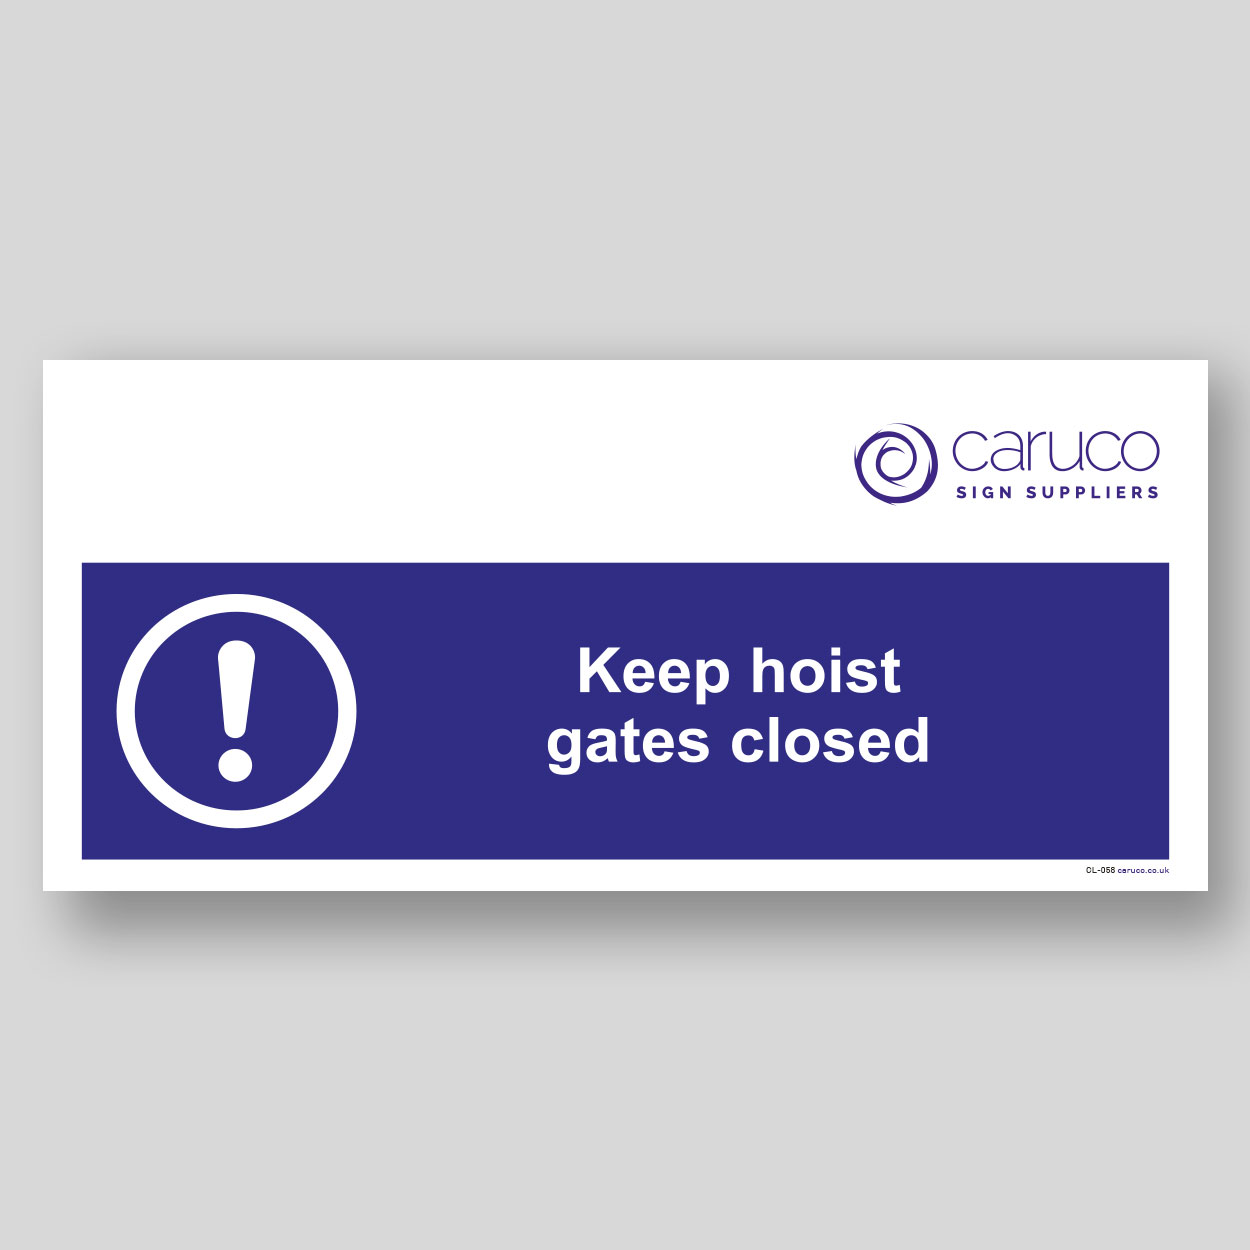 CL-058 Keep hoist gates closed